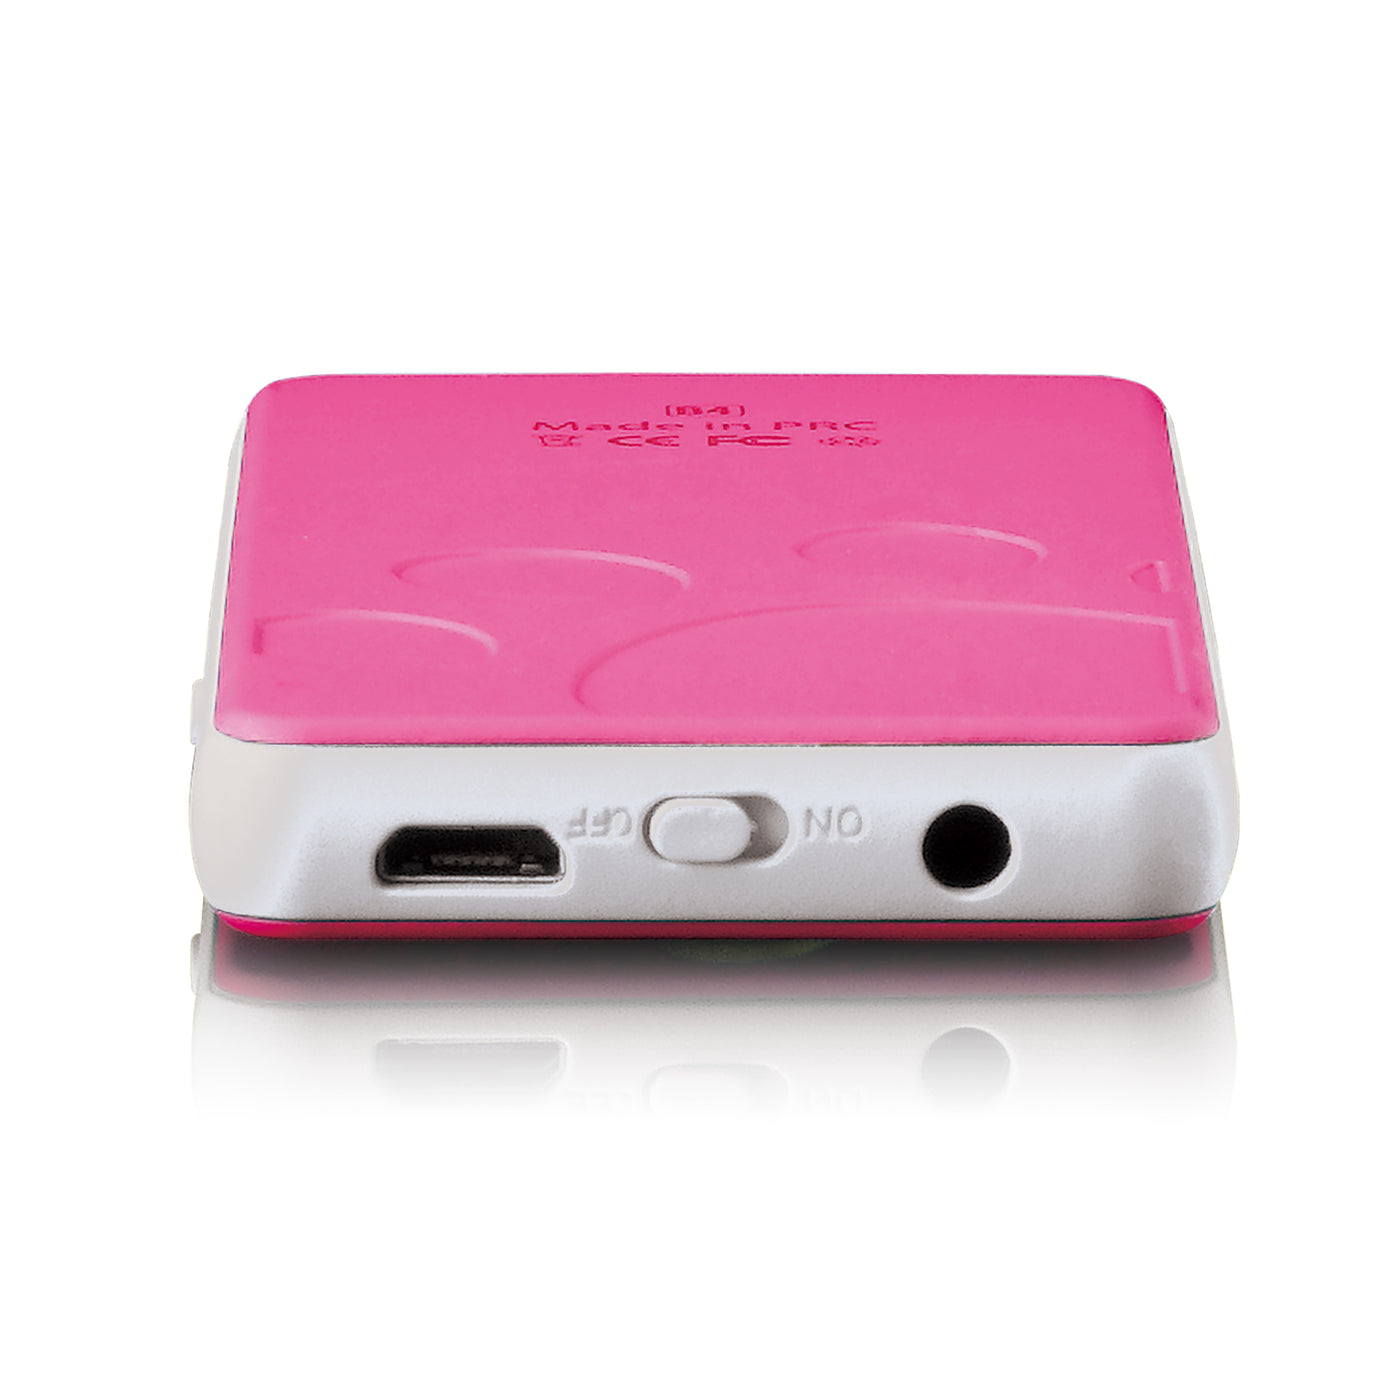 LENCO Xemio-560PK - MP3/MP4 speler met 8GB geheugen - Roze